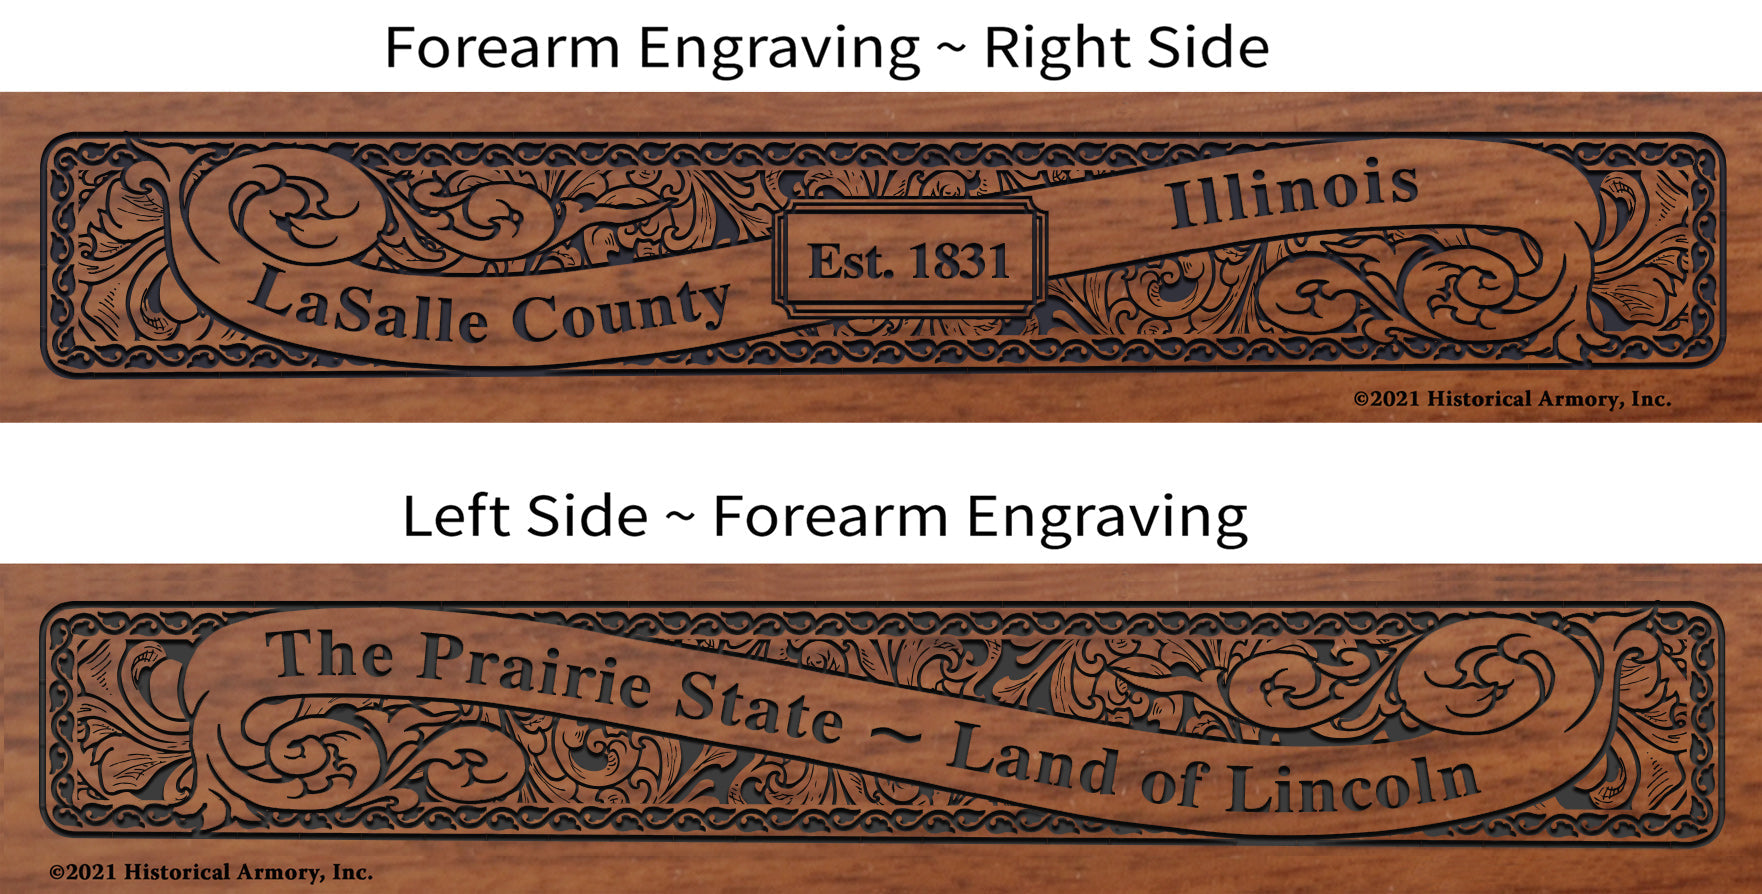 LaSalle County Illinois Establishment and Motto History Engraved Rifle Forearm